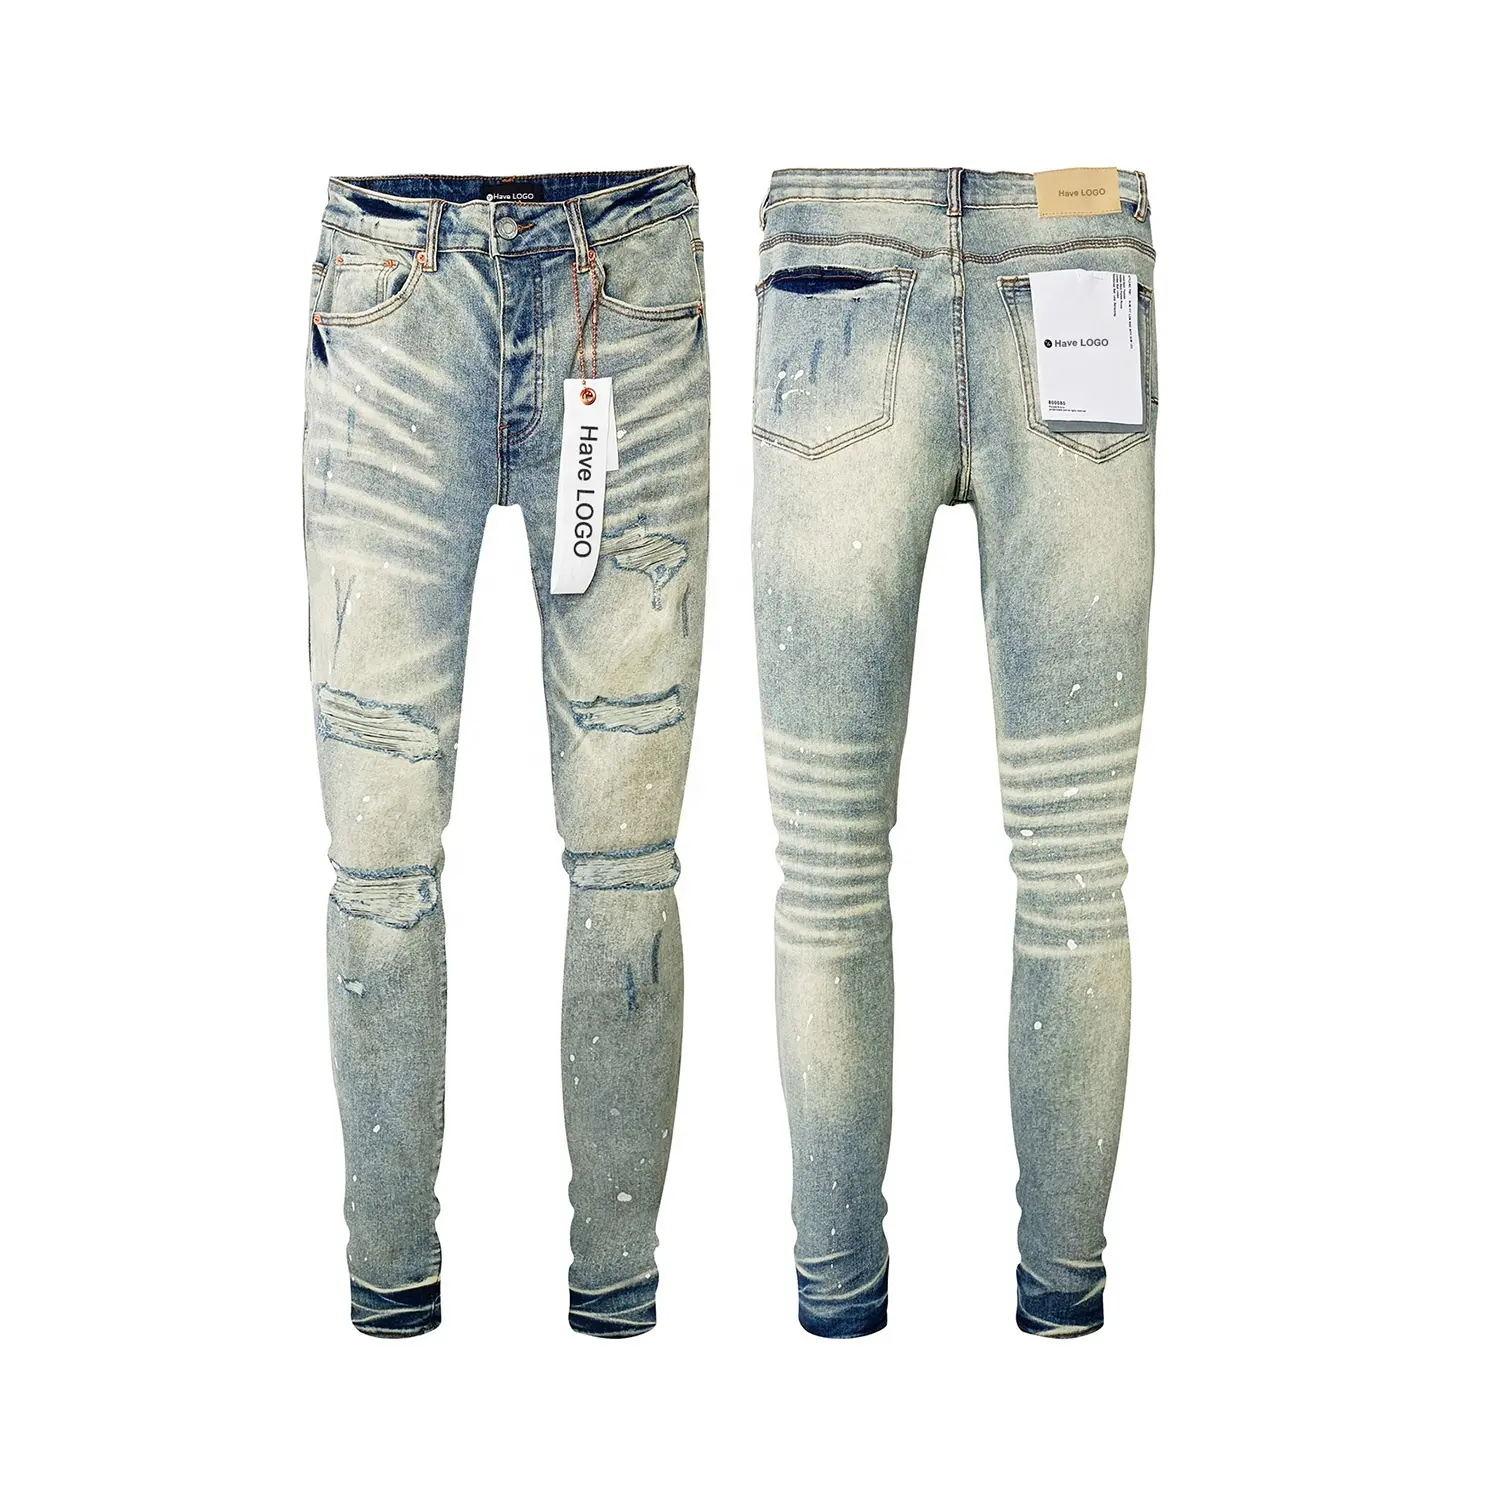 New Jeans In Stocks Light Blue Damaged Holes Tie Dye Designer Brand For Purple Brand Denim Pants Low Price